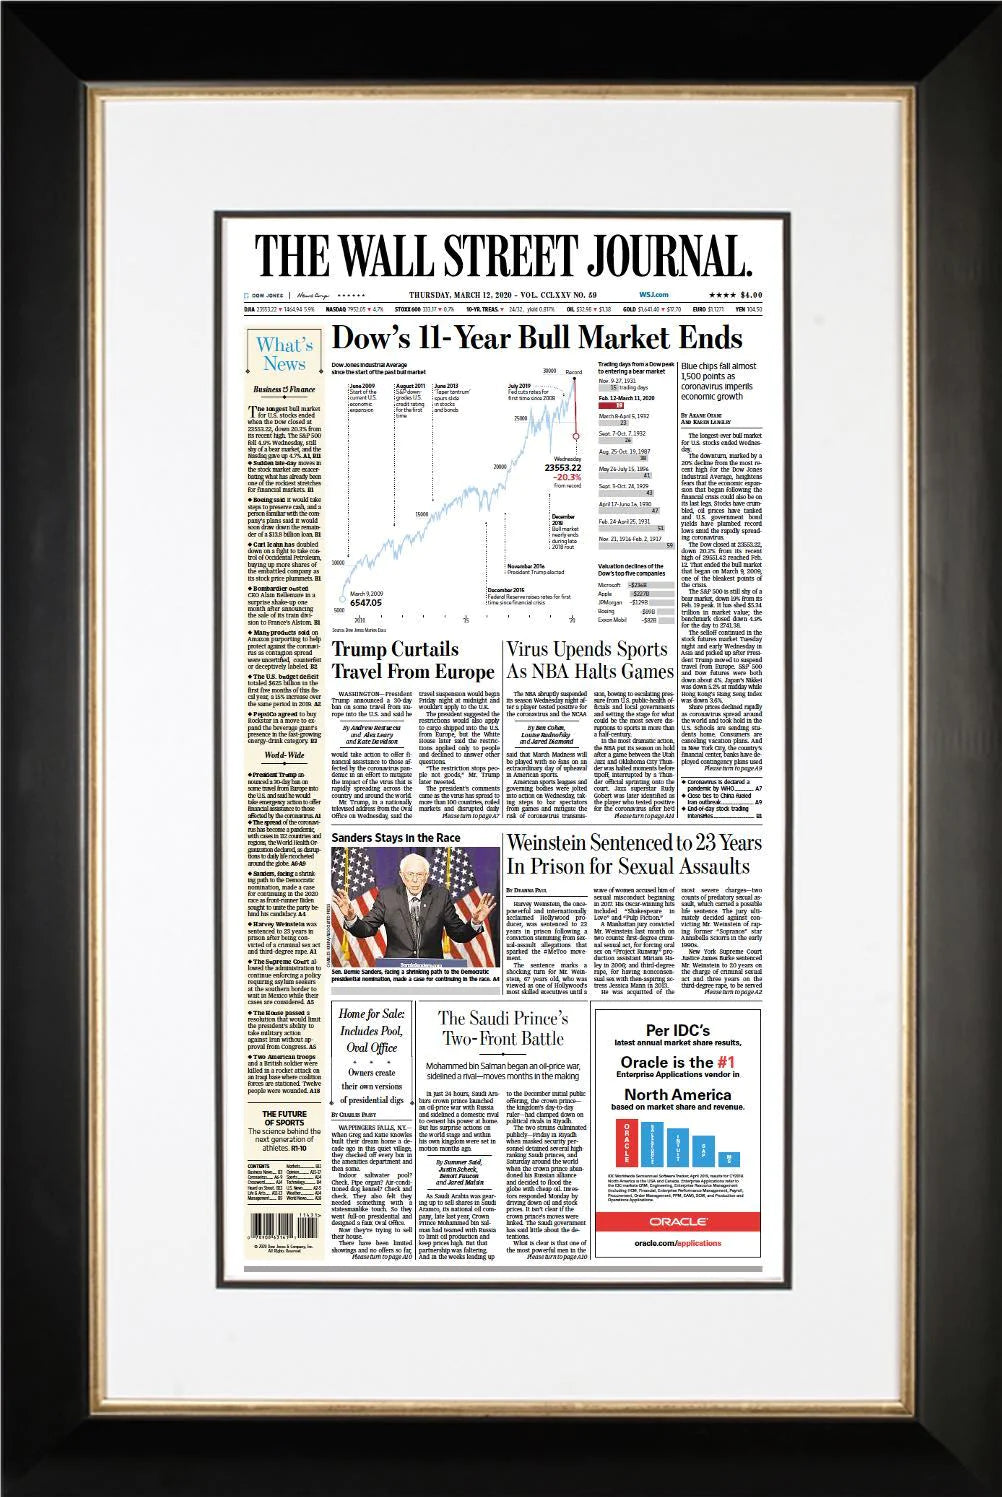 Bull Market Ends | The Wall Street Journal, Framed Reprint, March 12, 2020